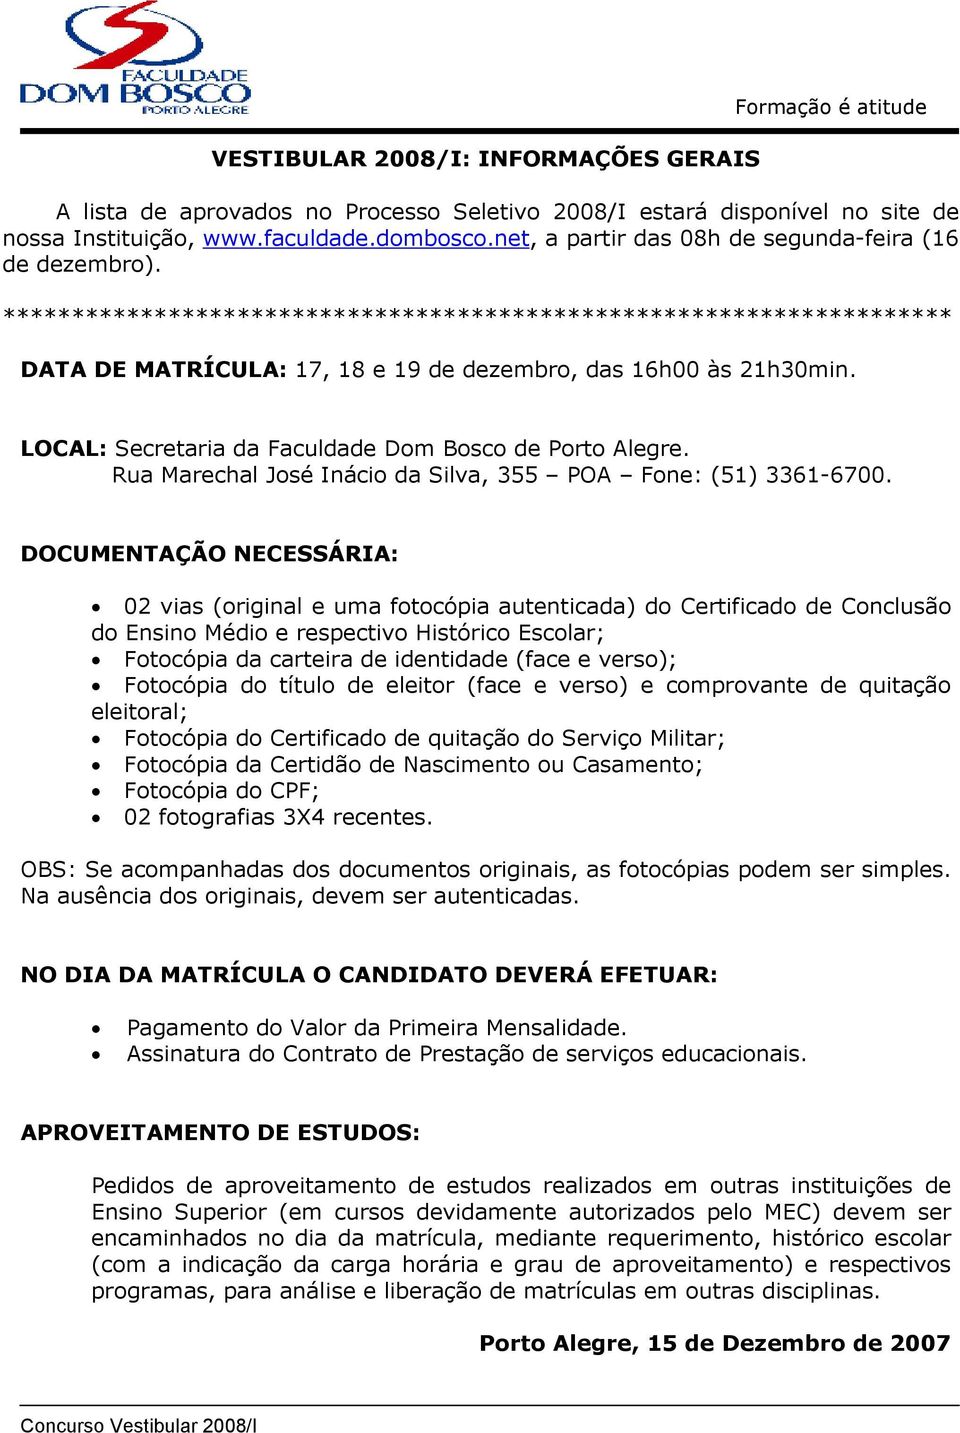 LOCAL: Secretaria da Faculdade Dom Bosco de Porto Alegre. Rua Marechal José Inácio da Silva, 355 POA Fone: (51) 3361-6700.